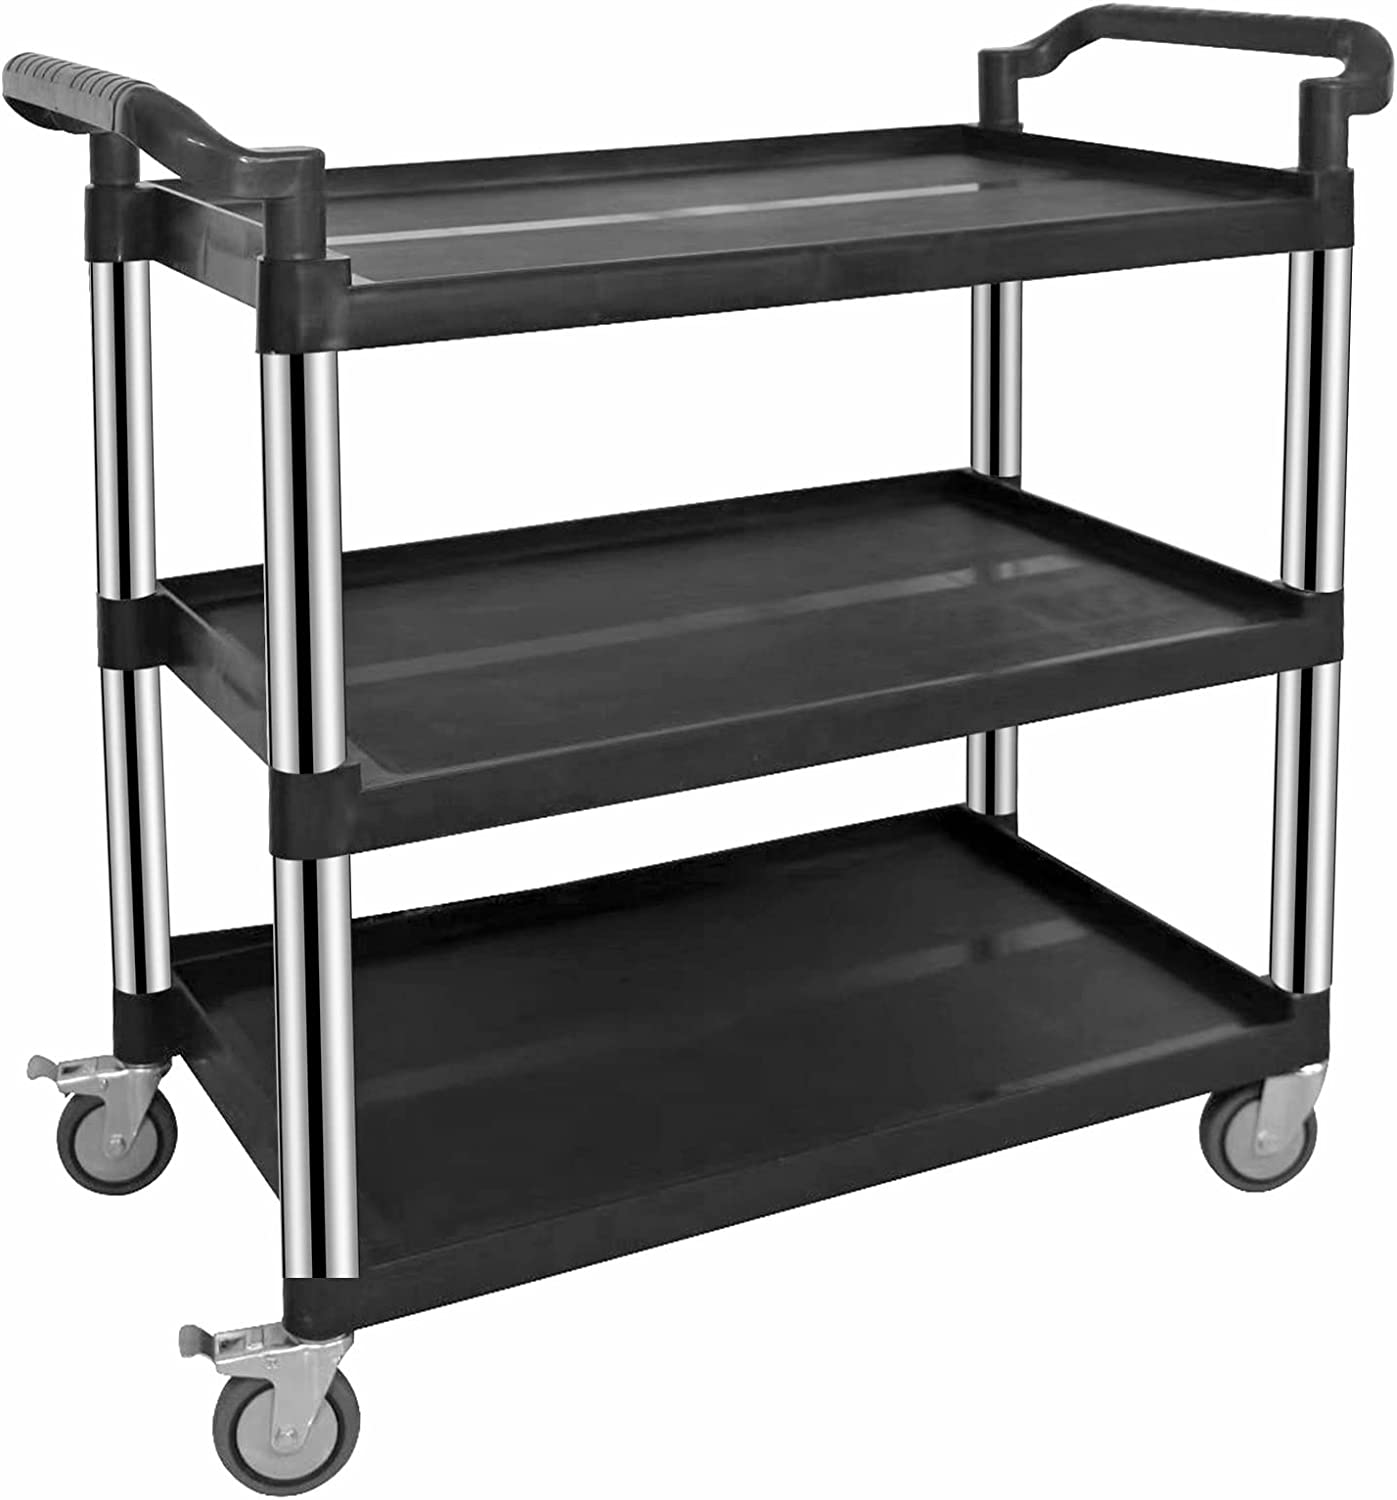 Easy-Up® Supplement Storage Cart